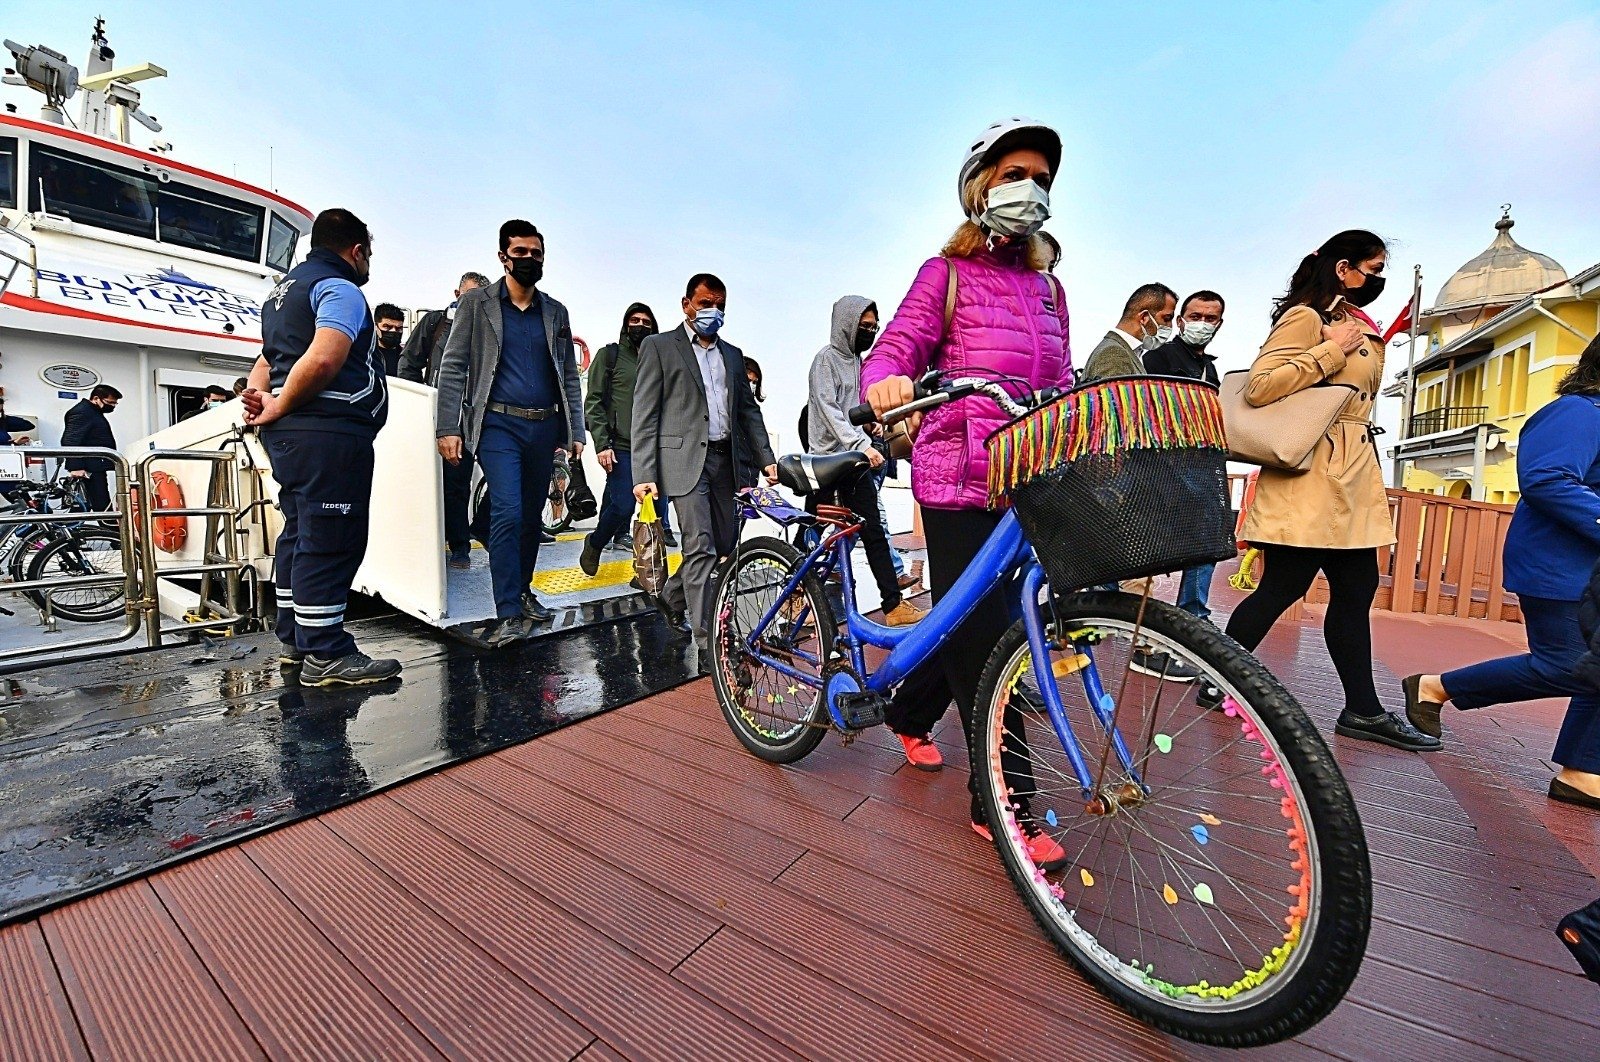 Izmir Turki melihat ledakan sepeda dengan lebih banyak sarana untuk dikendarai